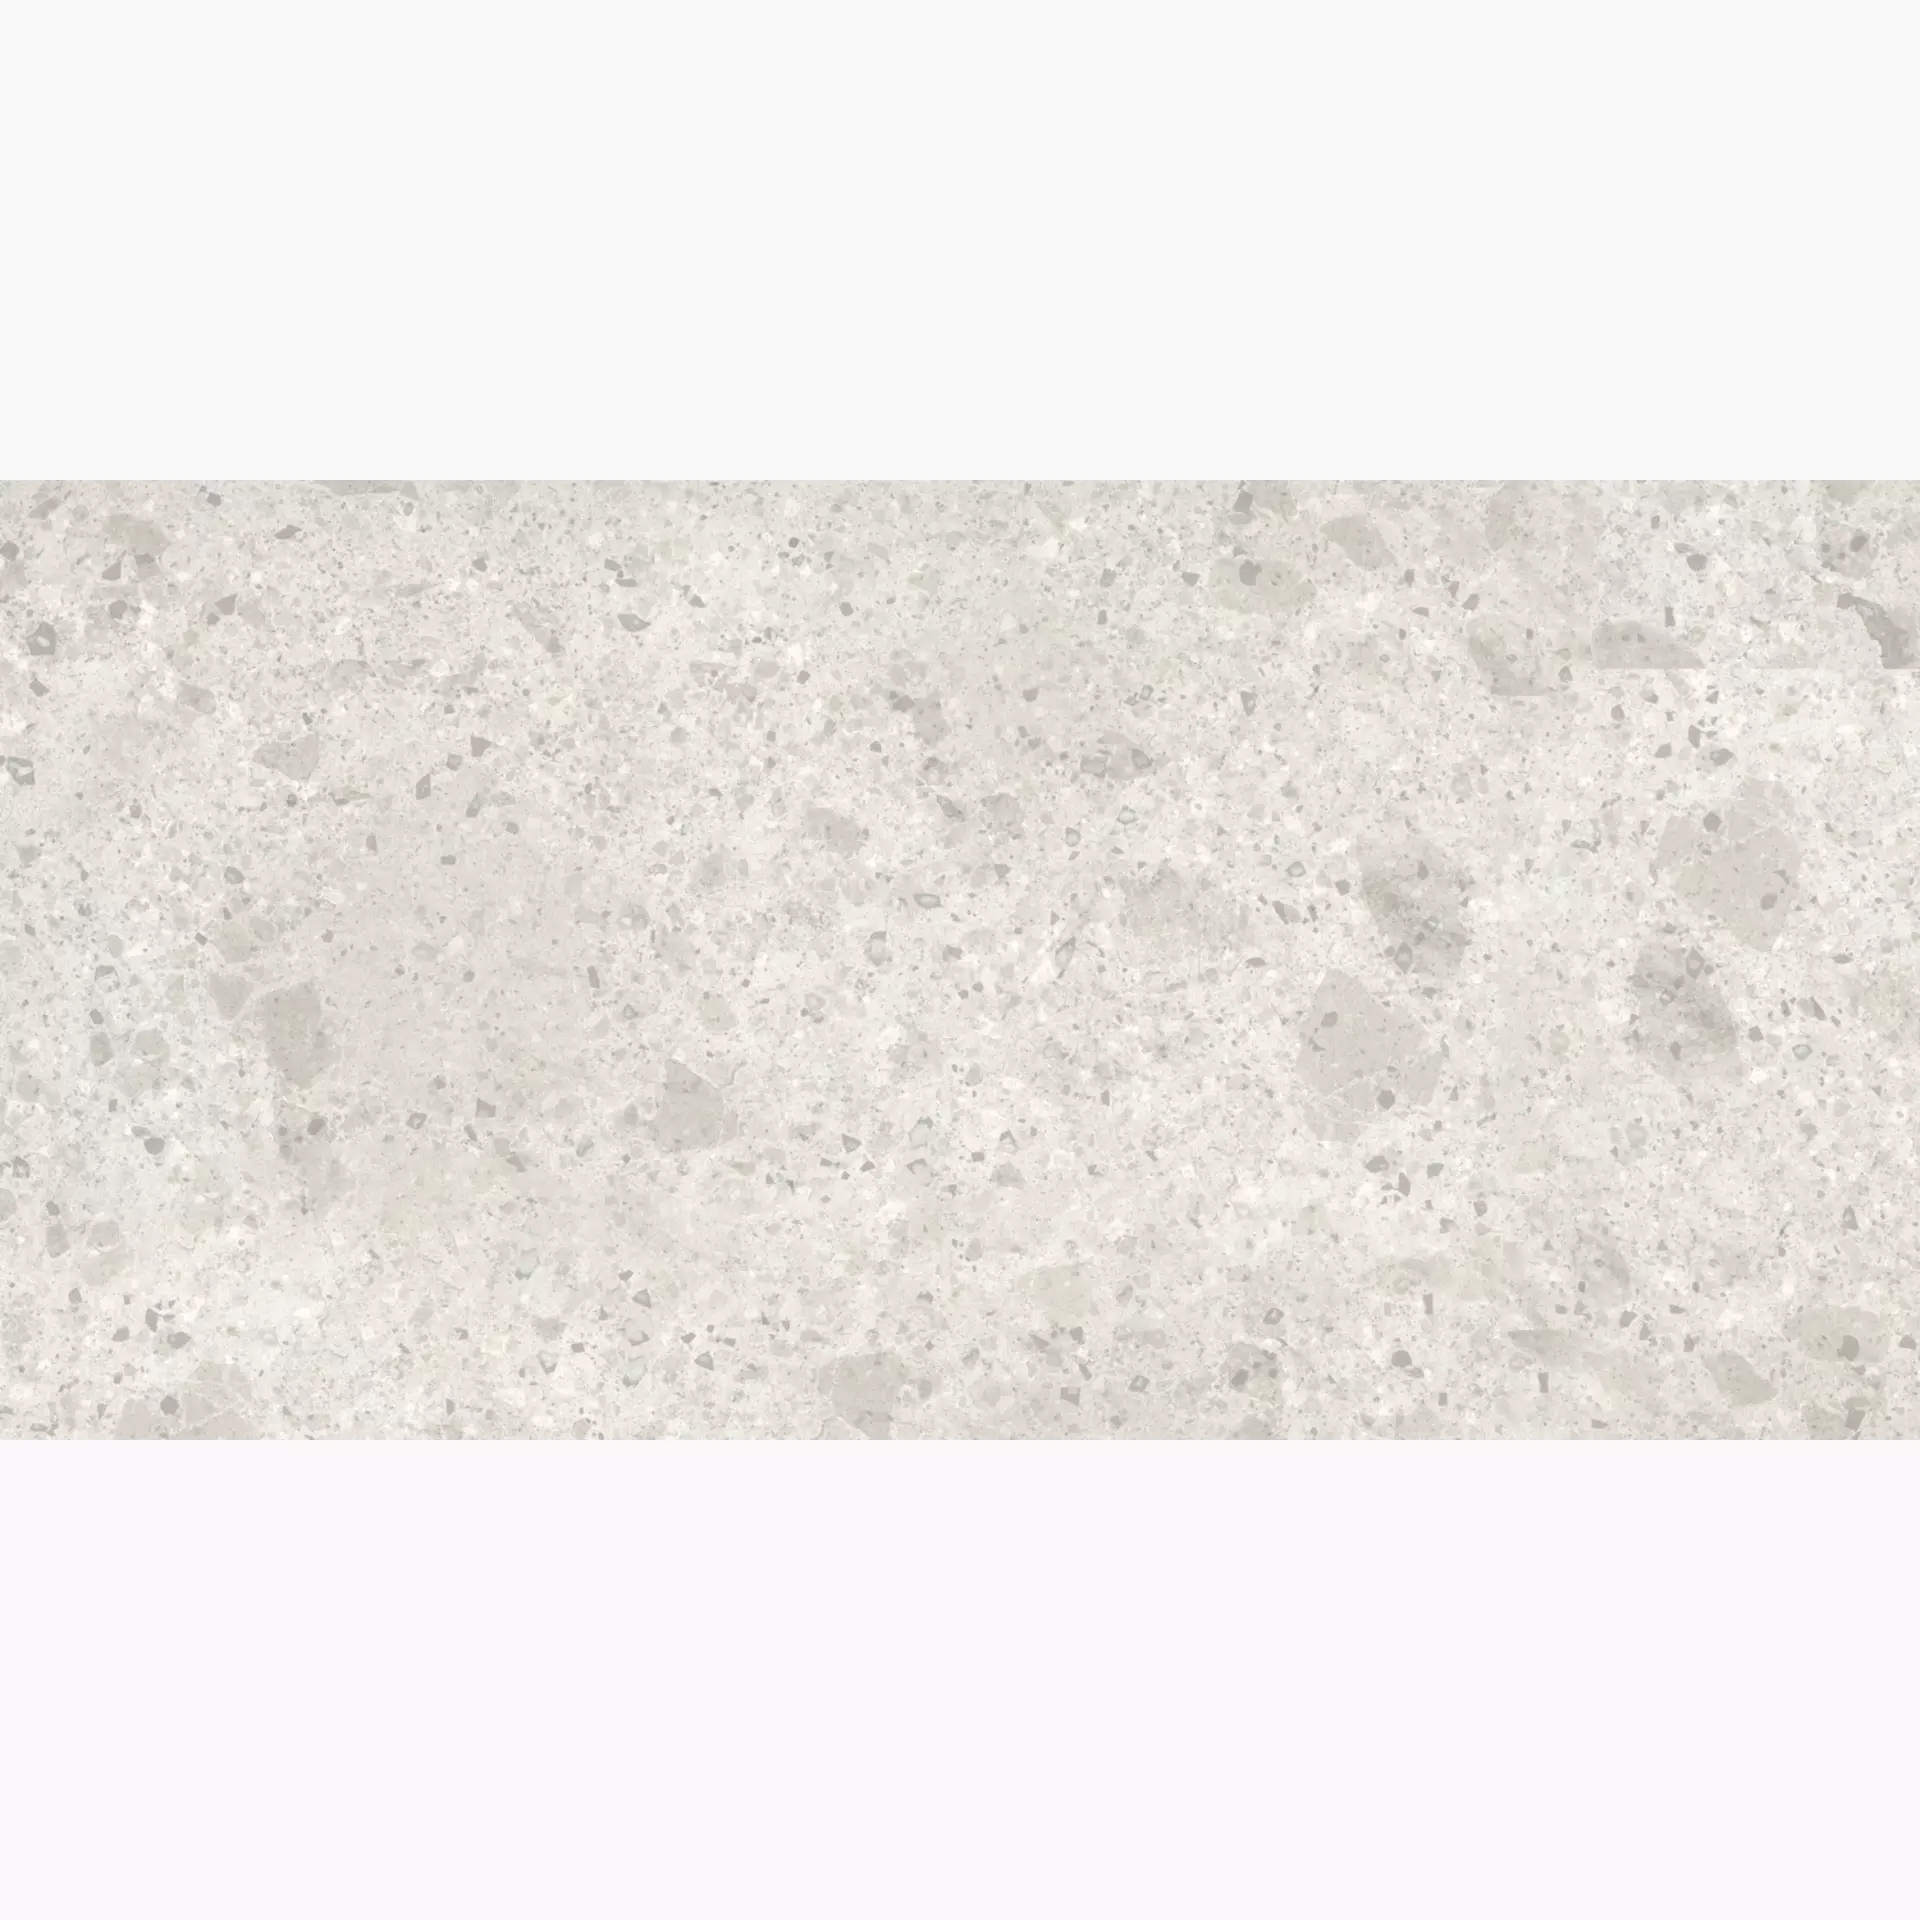 Ariostea Fragmenta Full Body Bianco Greco Strutturato PS150616 75x150cm rectified 10mm